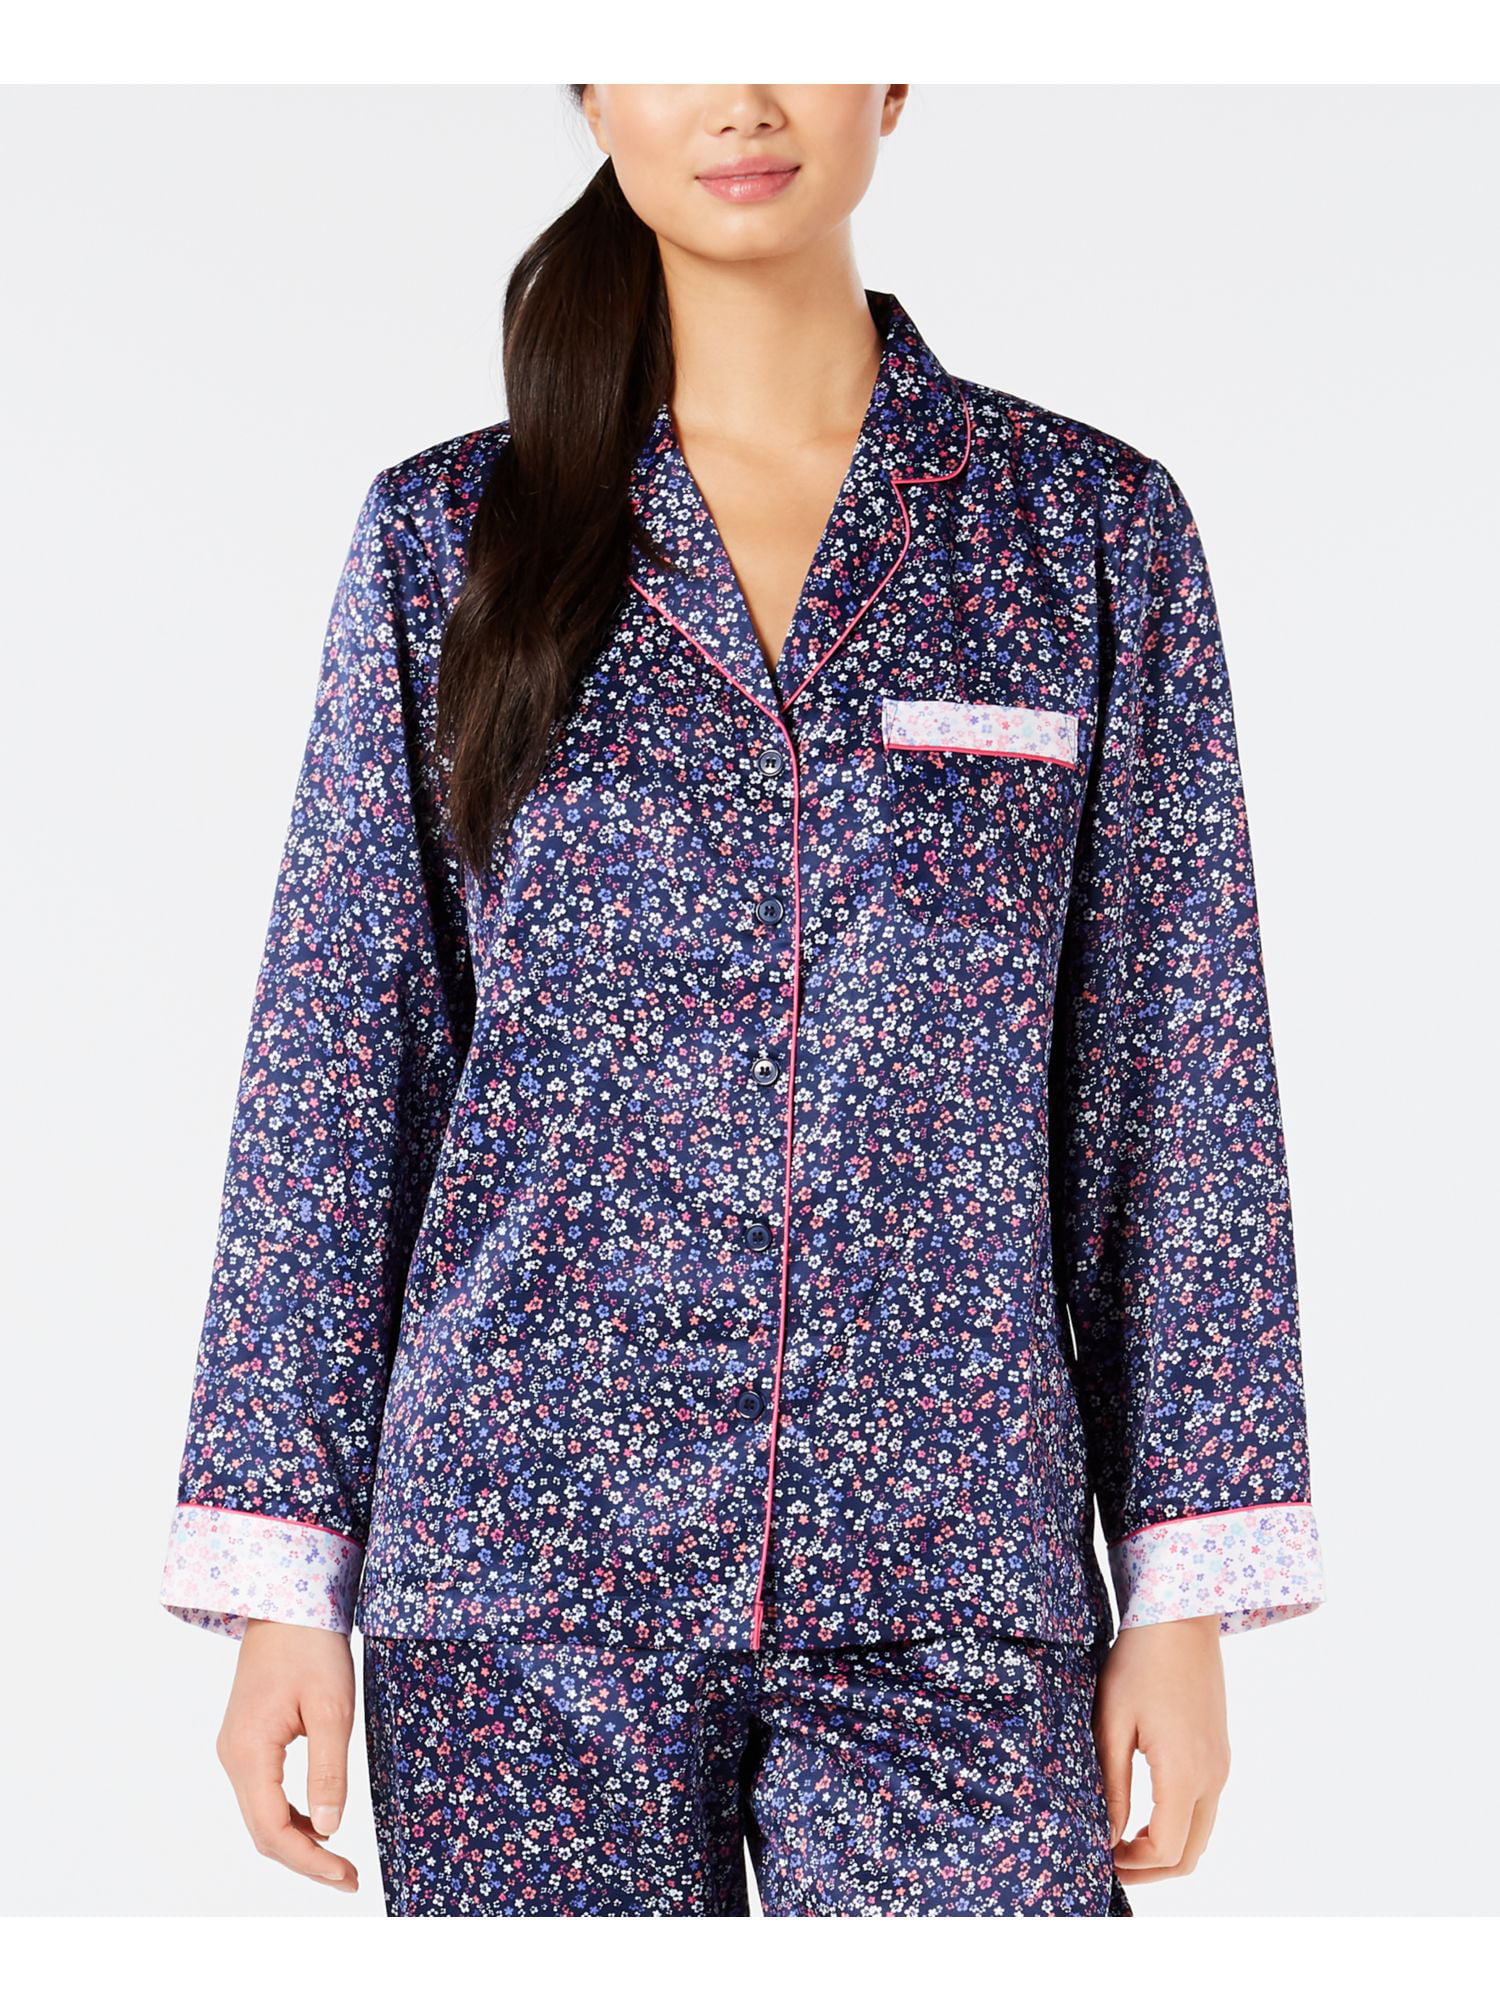 CHARTER CLUB INTIMATES Intimates Navy Floral Sleepwear Sleep Shirt Pajama  Top XL 